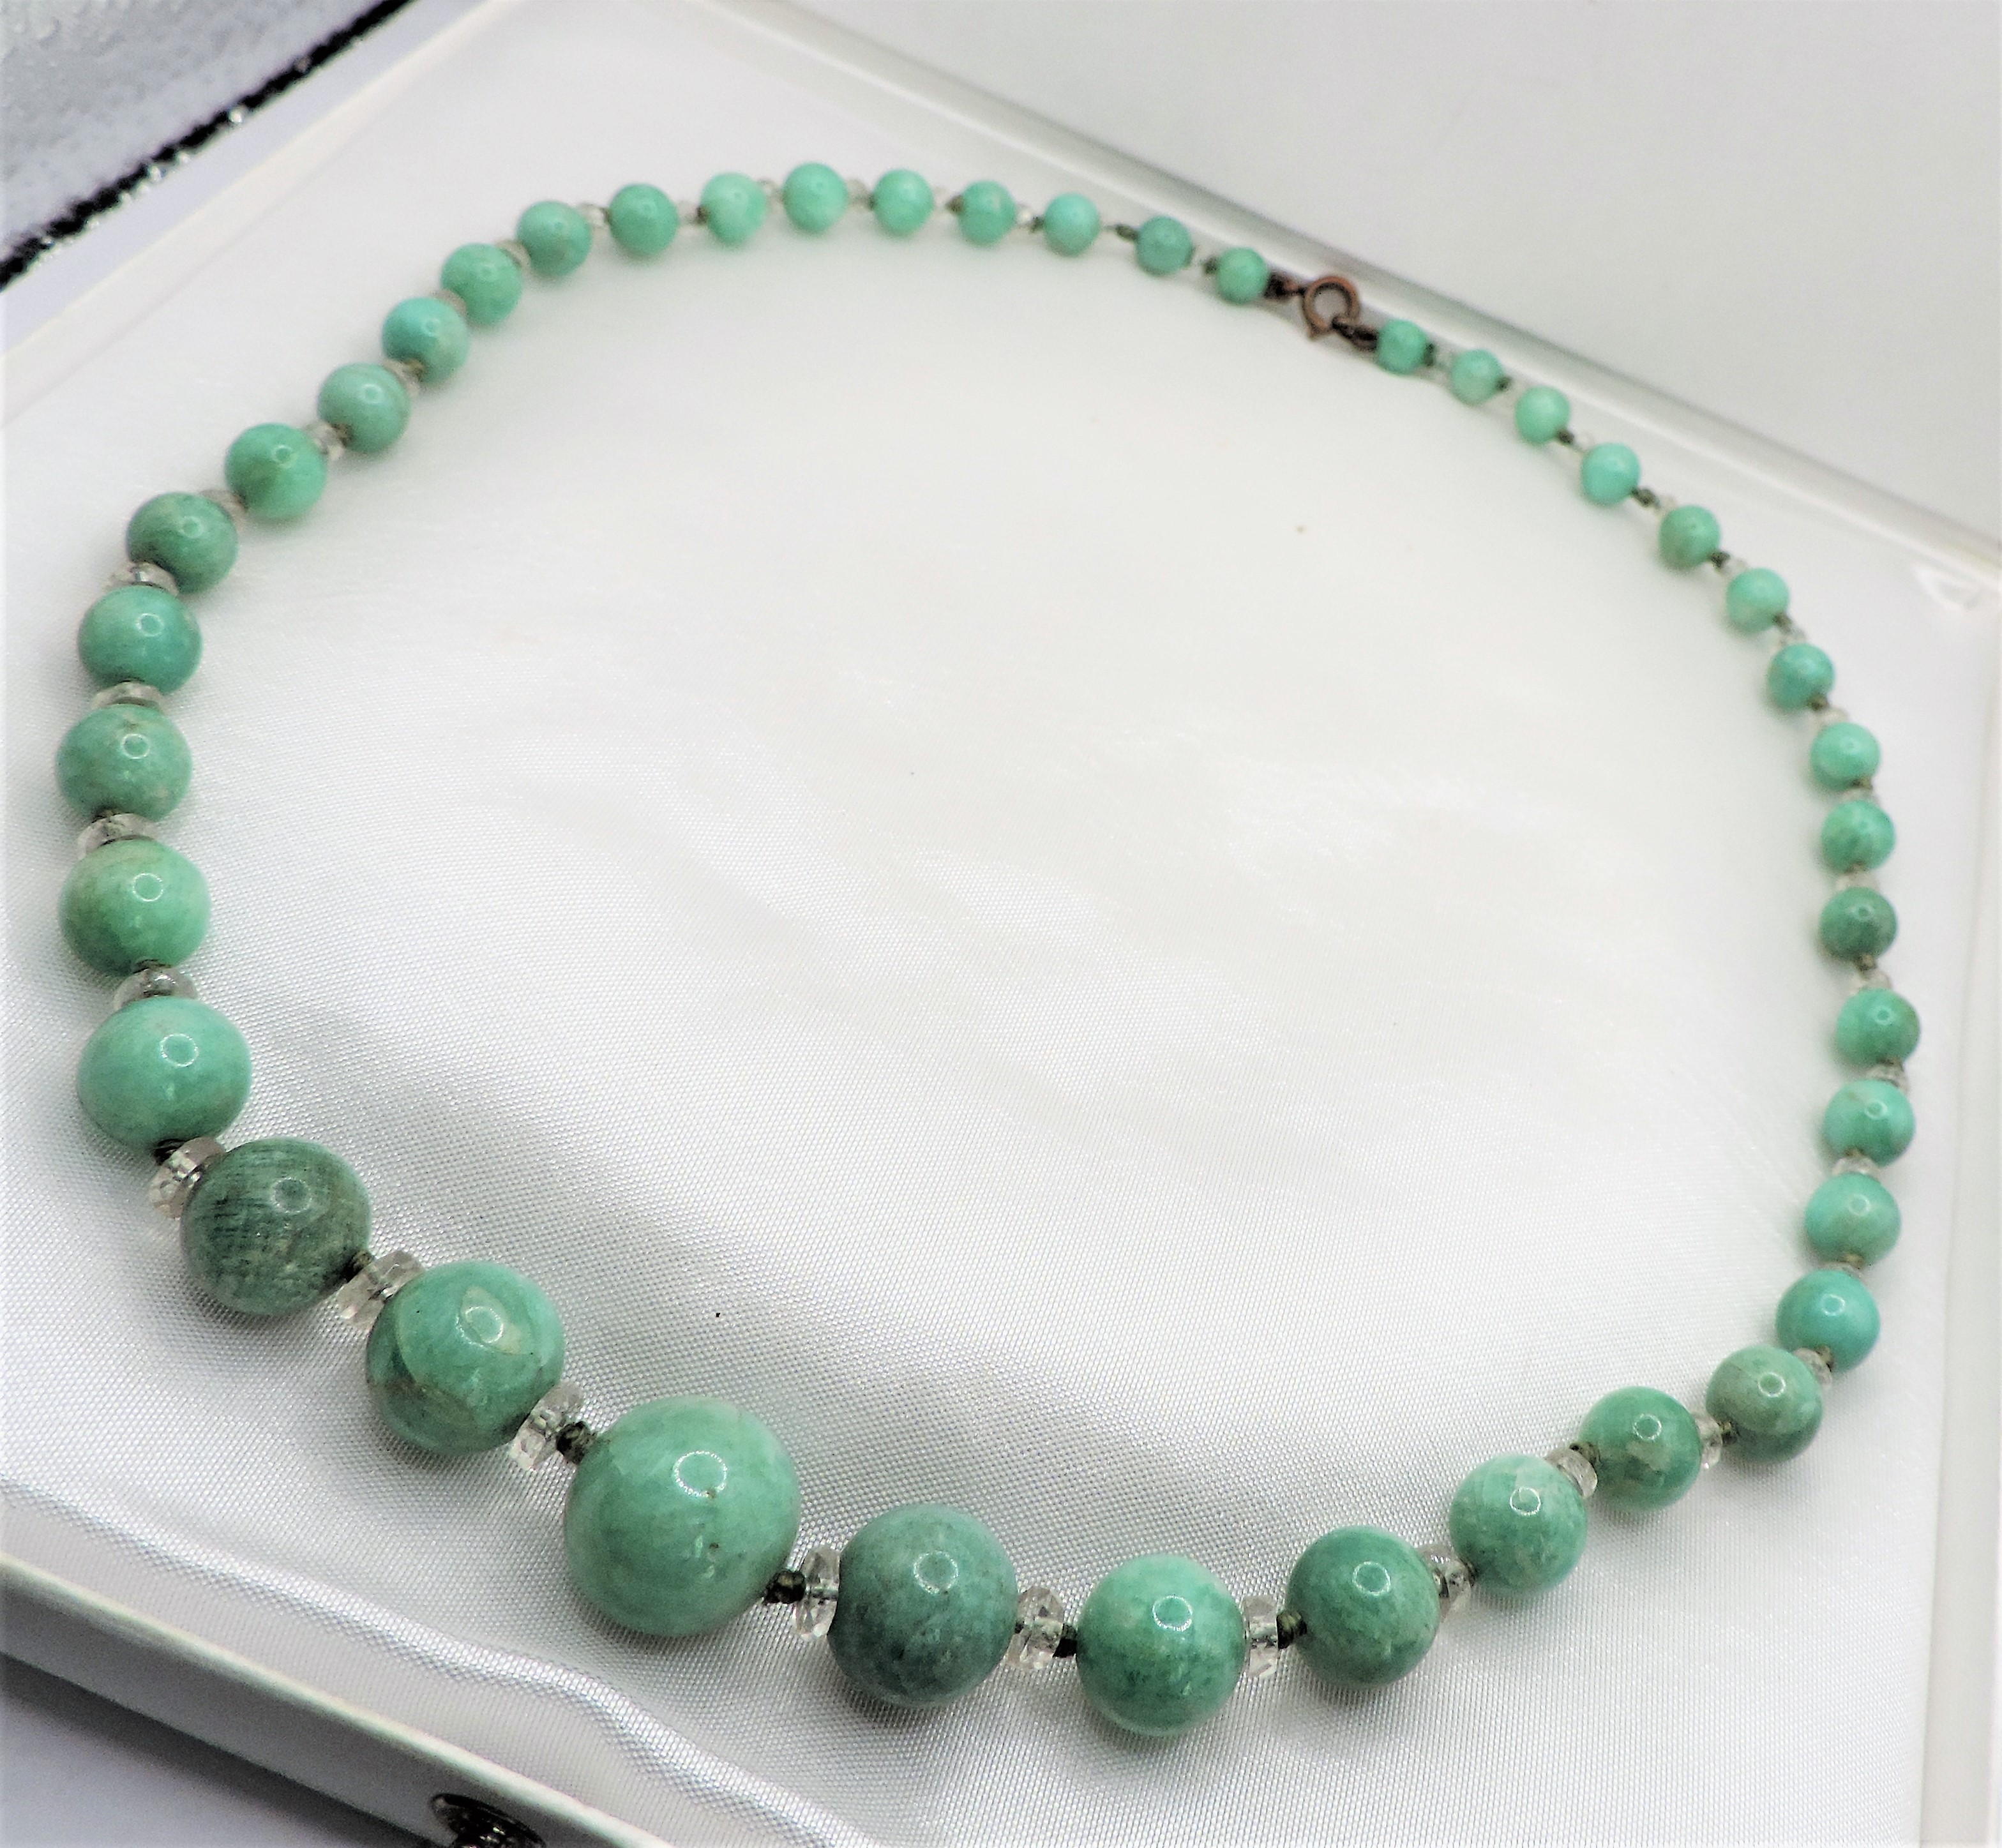 Antique Graduated Amazonite Beads Gemstone Necklace c.1920's Art Deco - Image 4 of 6